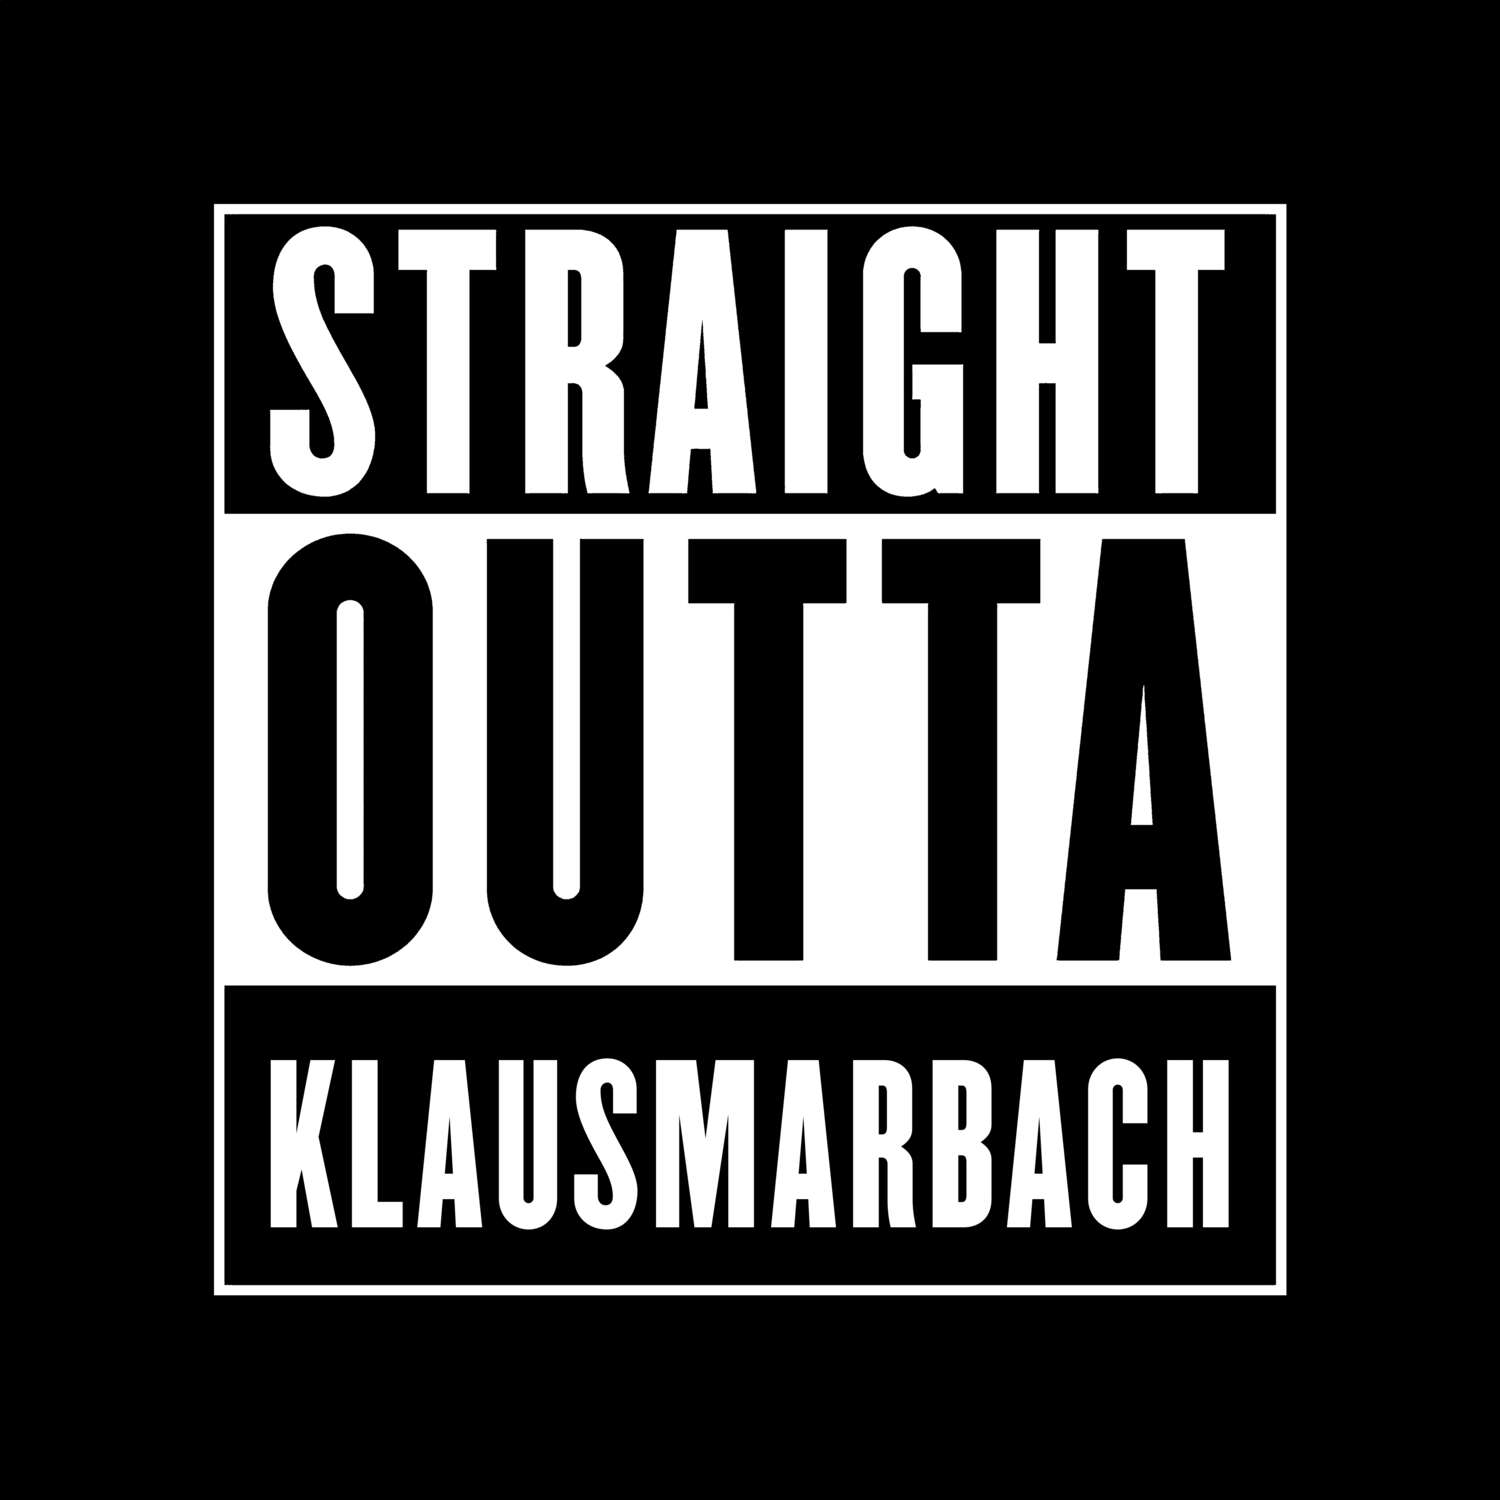 Klausmarbach T-Shirt »Straight Outta«